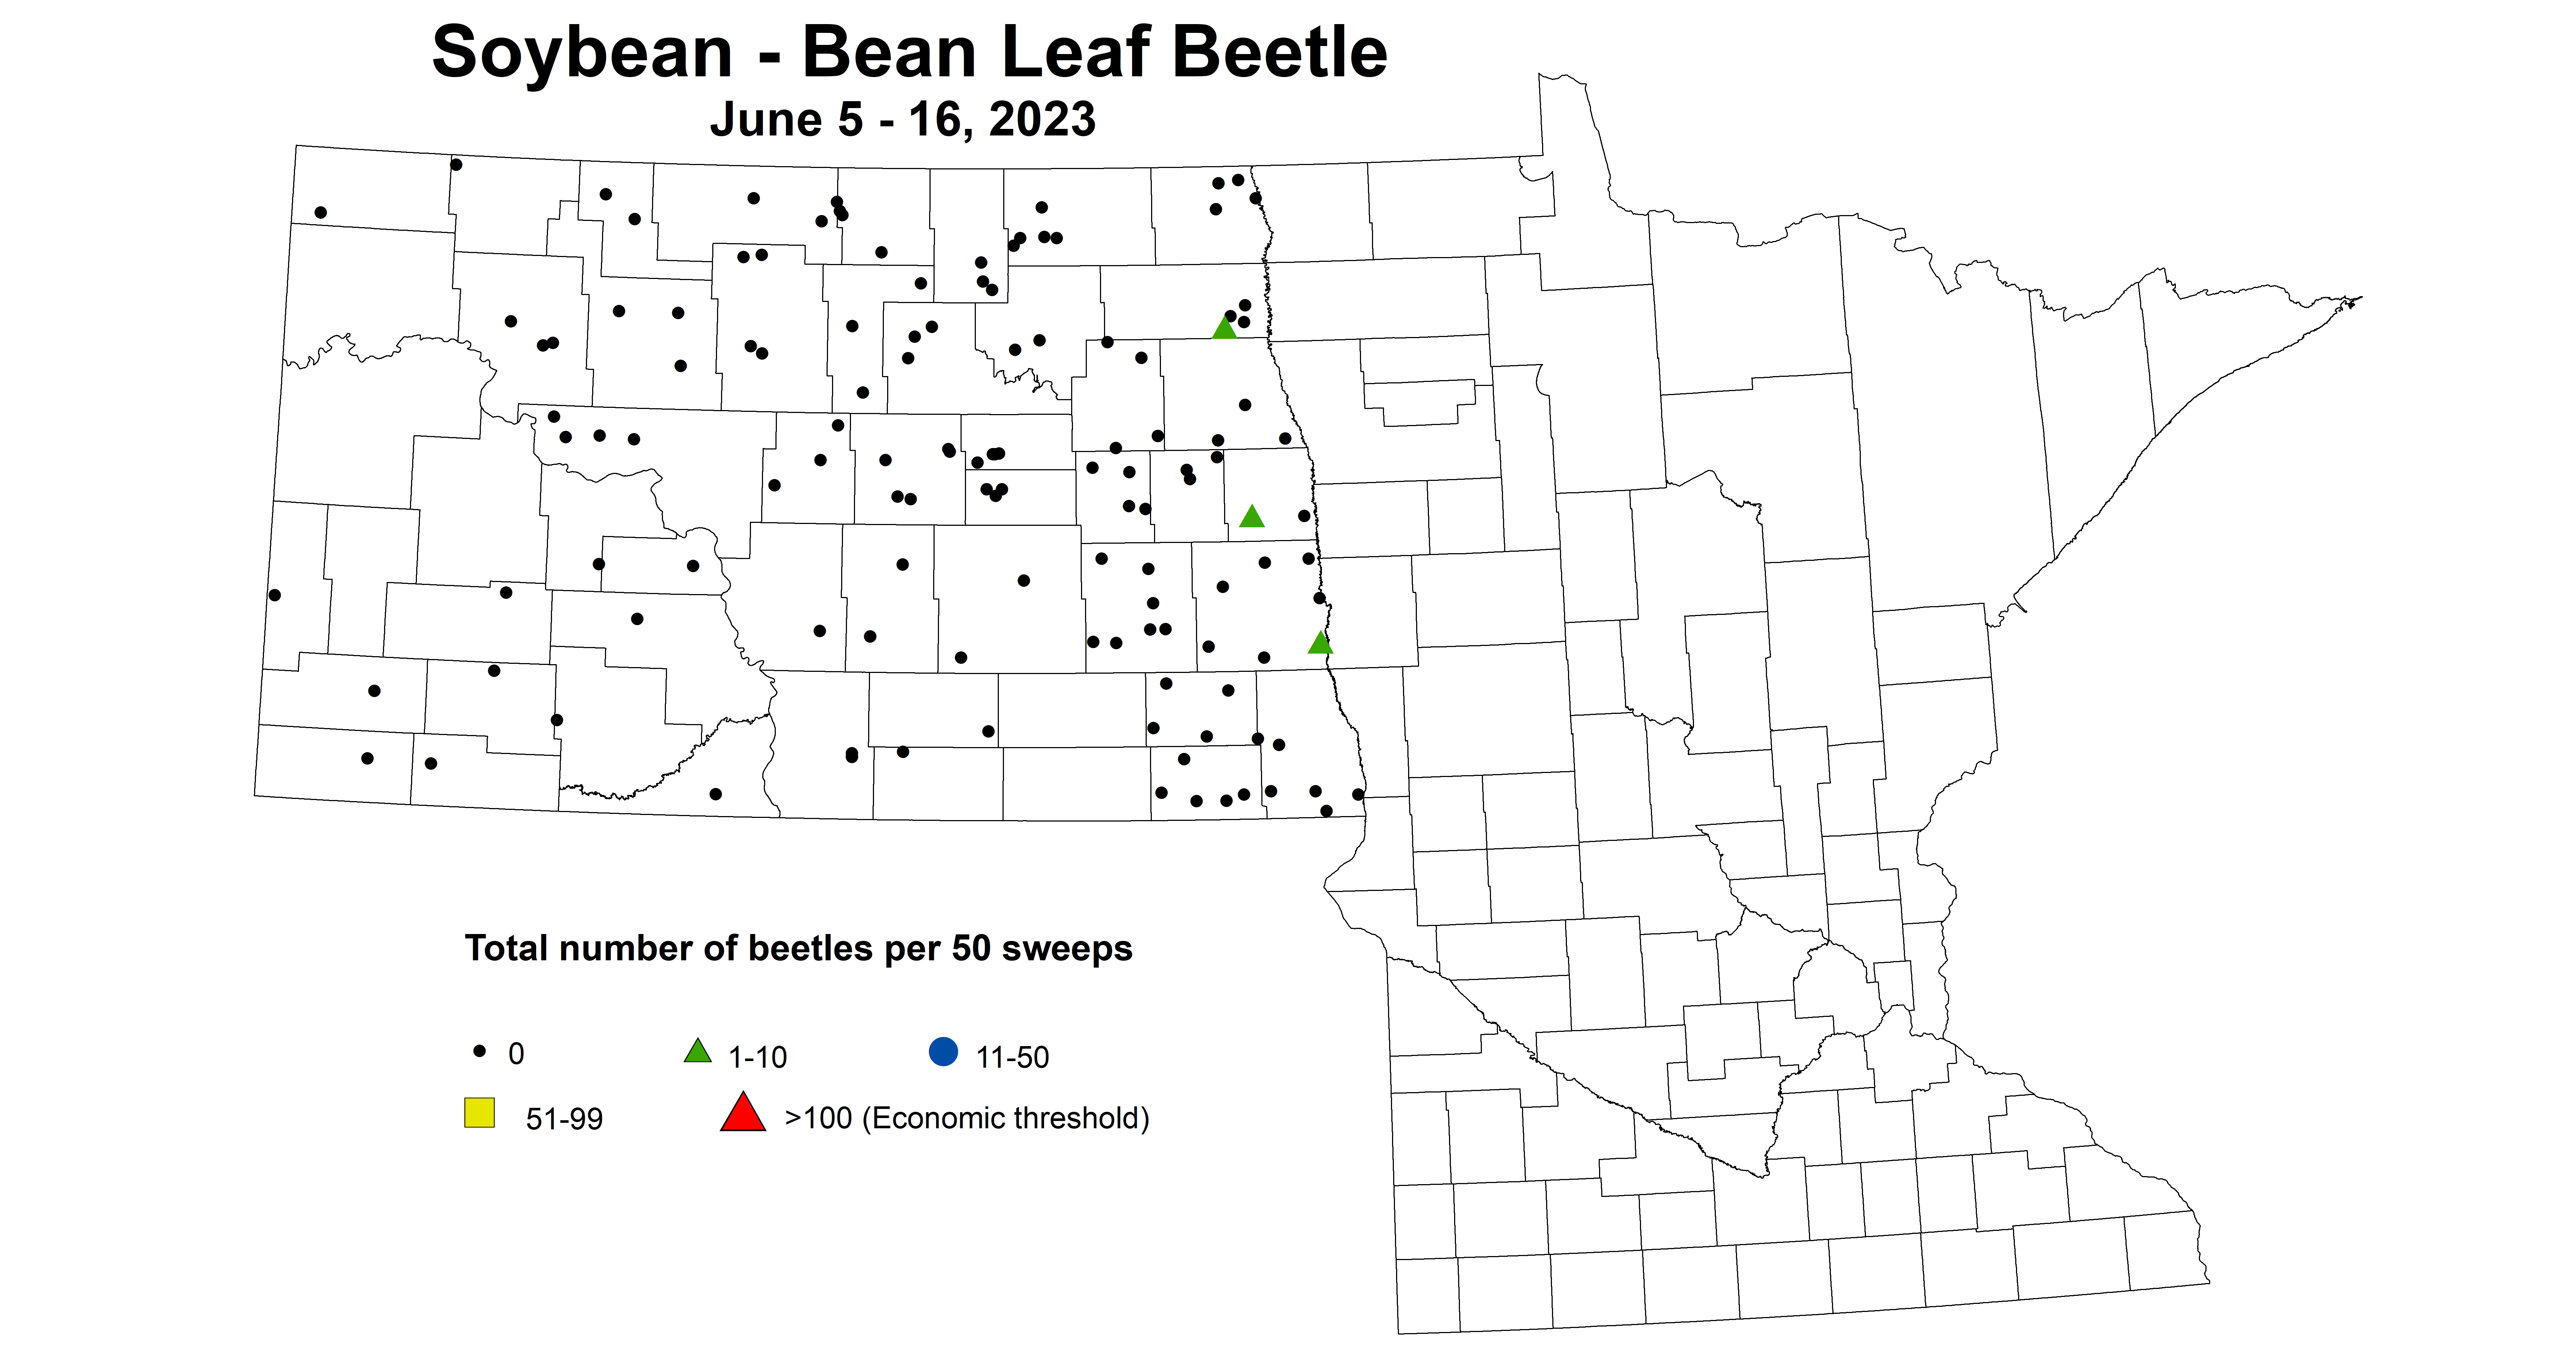 soybean BLB per 50 sweeps June 5-16 2023